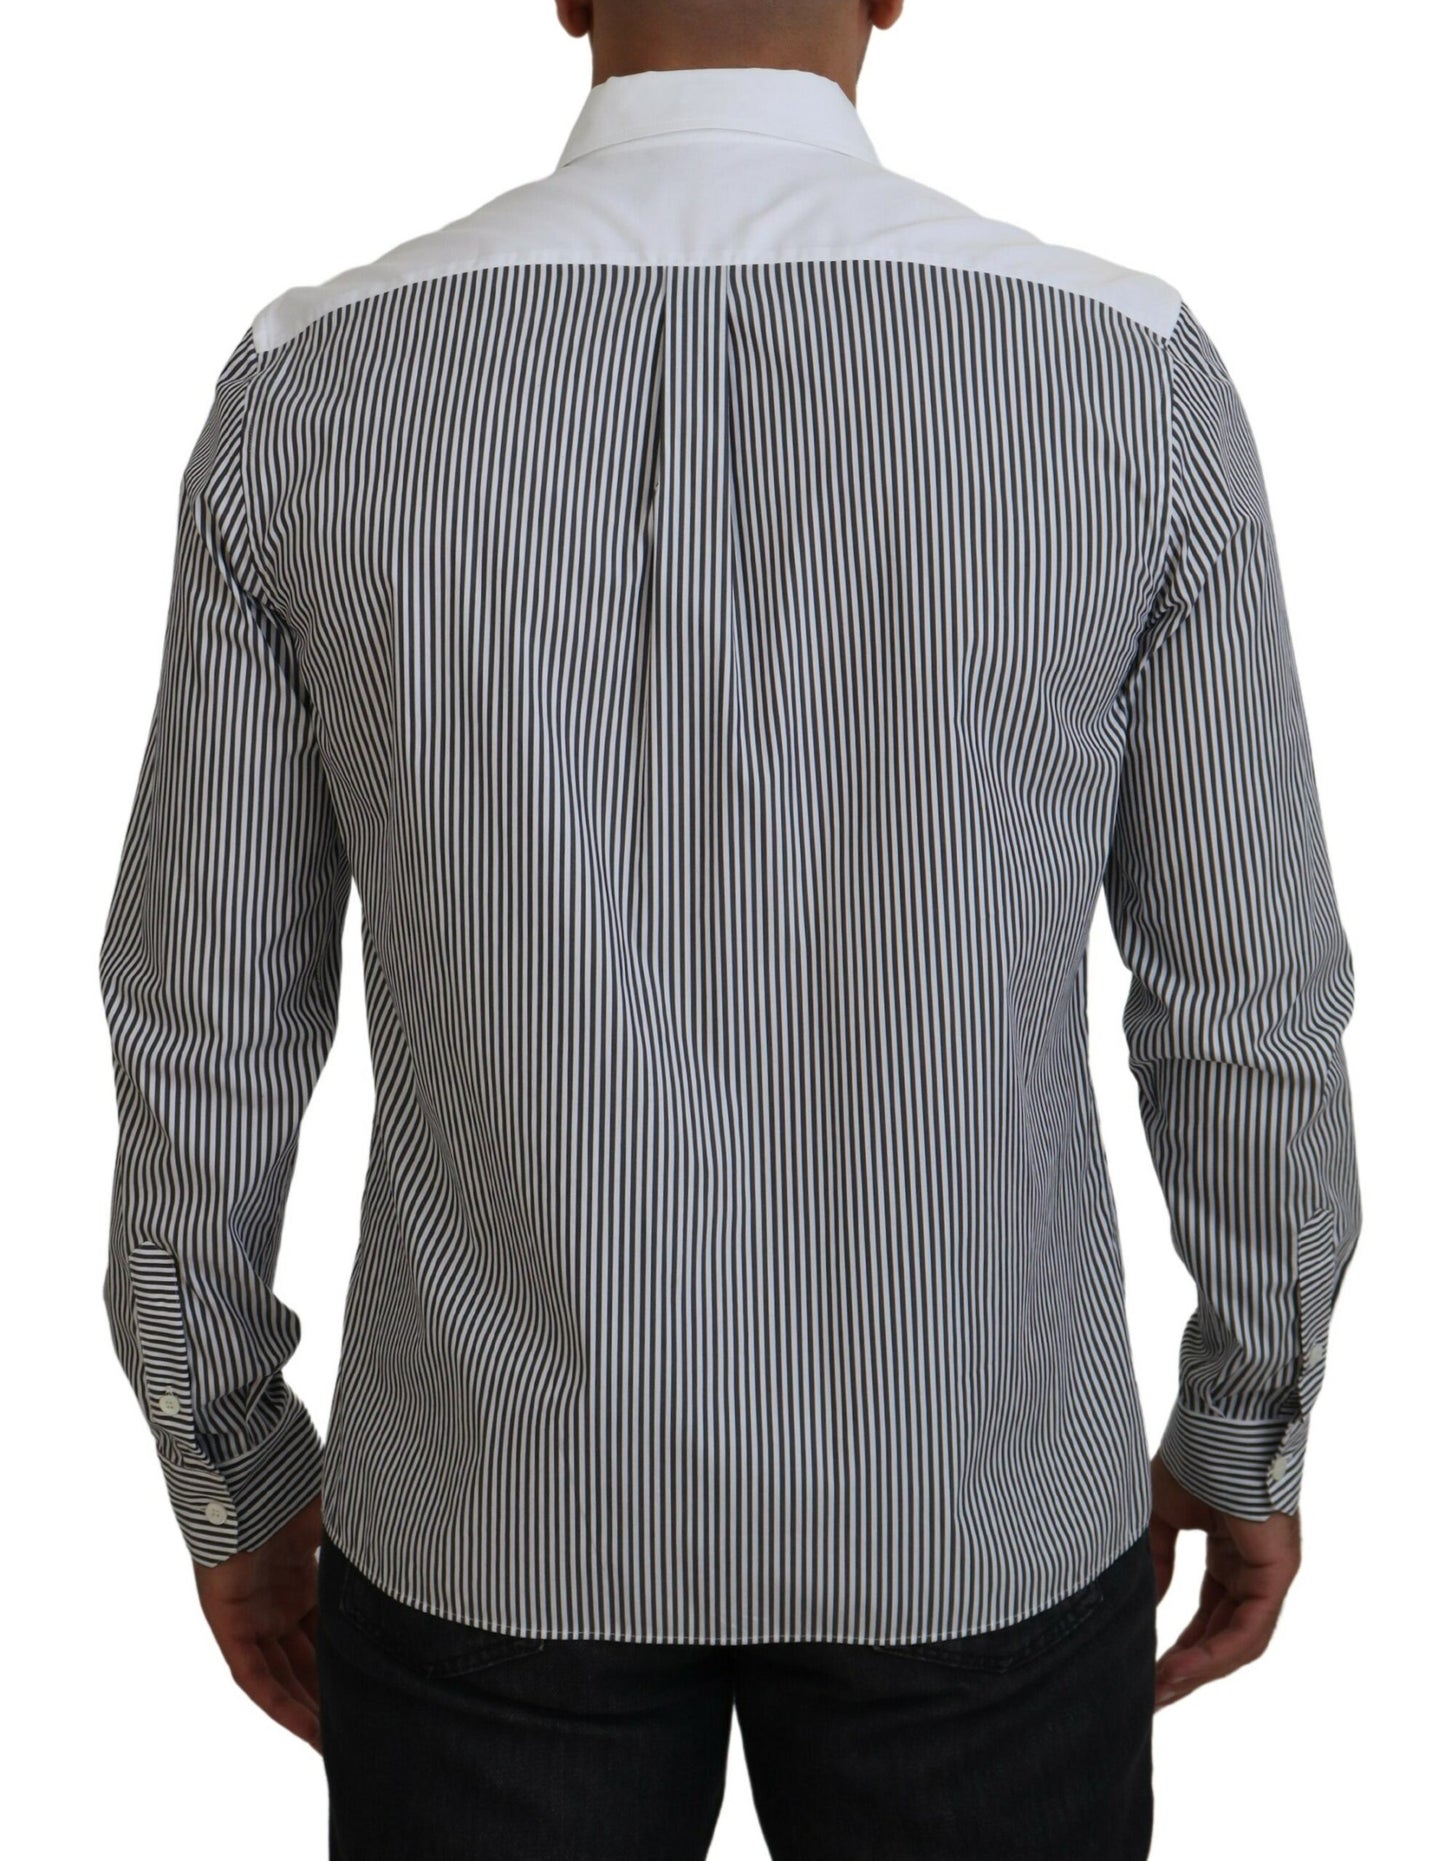 Dolce & Gabbana Classic Black and White Striped Button-Down Shirt